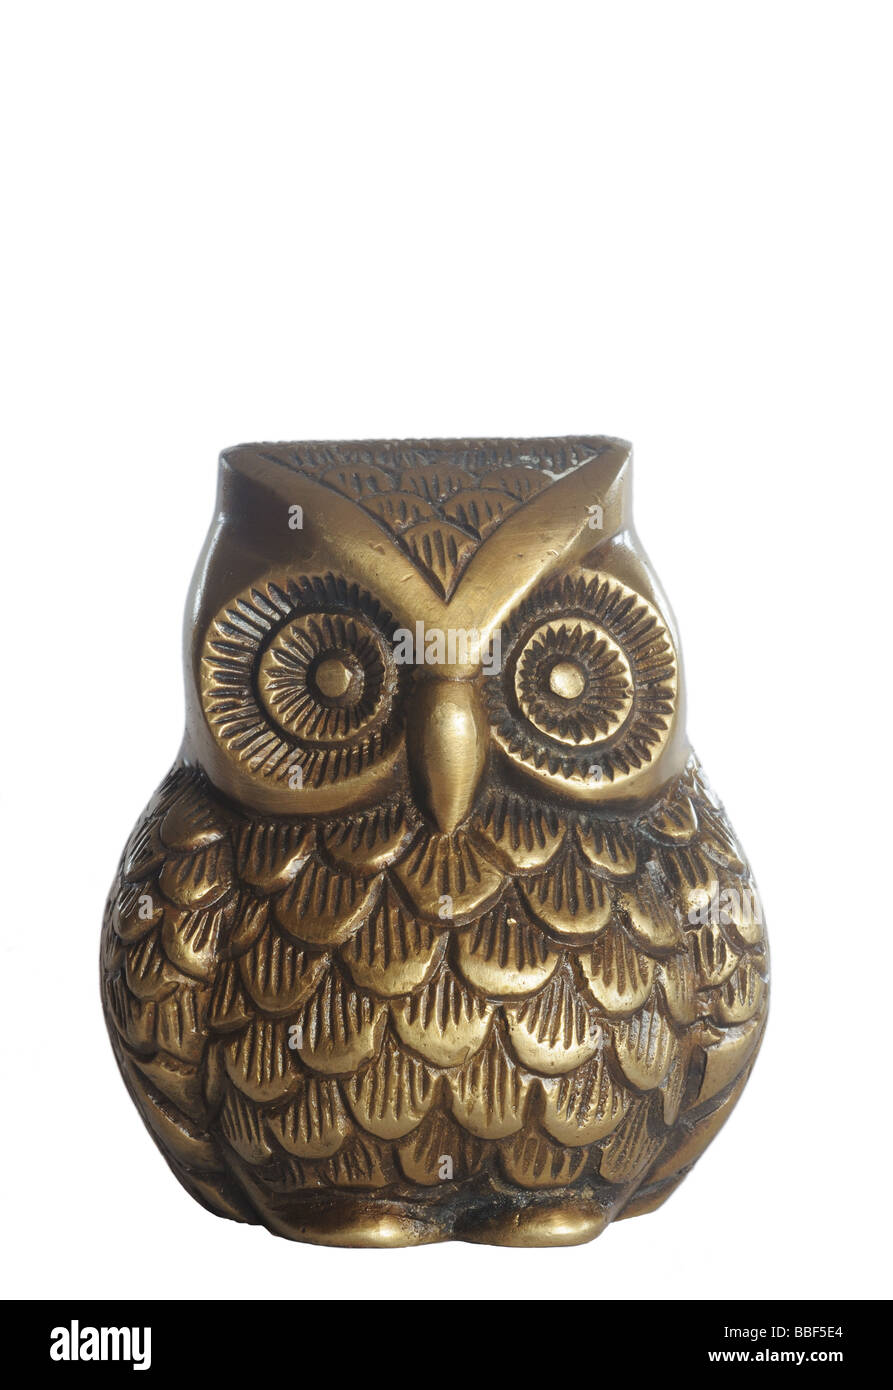 Brass owl ornament Stock Photo